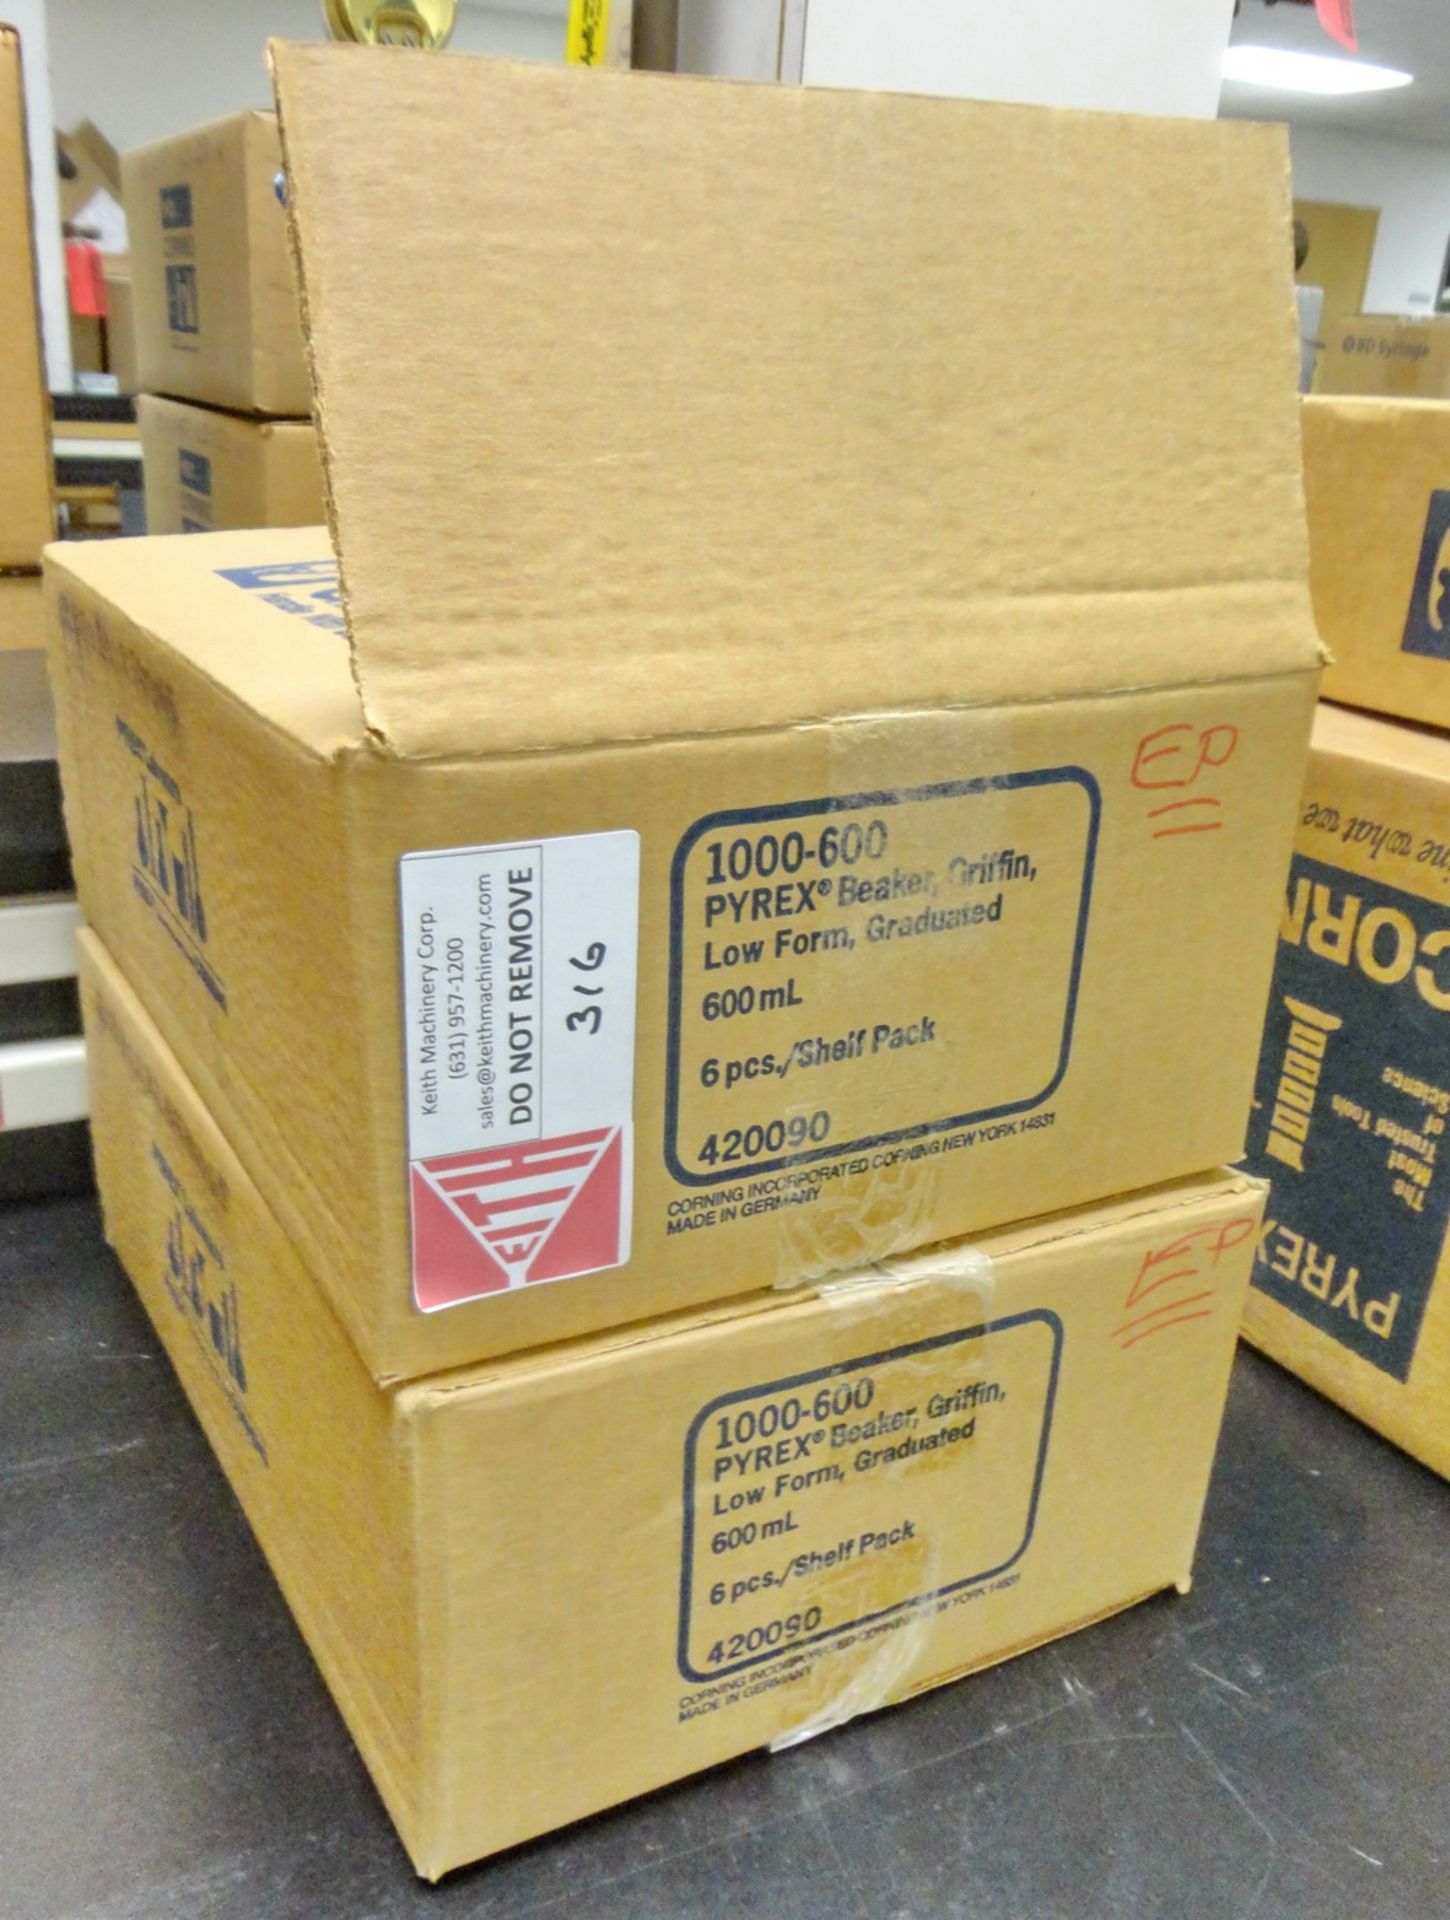 (2) Boxes of unused Corning Pyrex 600 ml beakers, 6 beakers per box